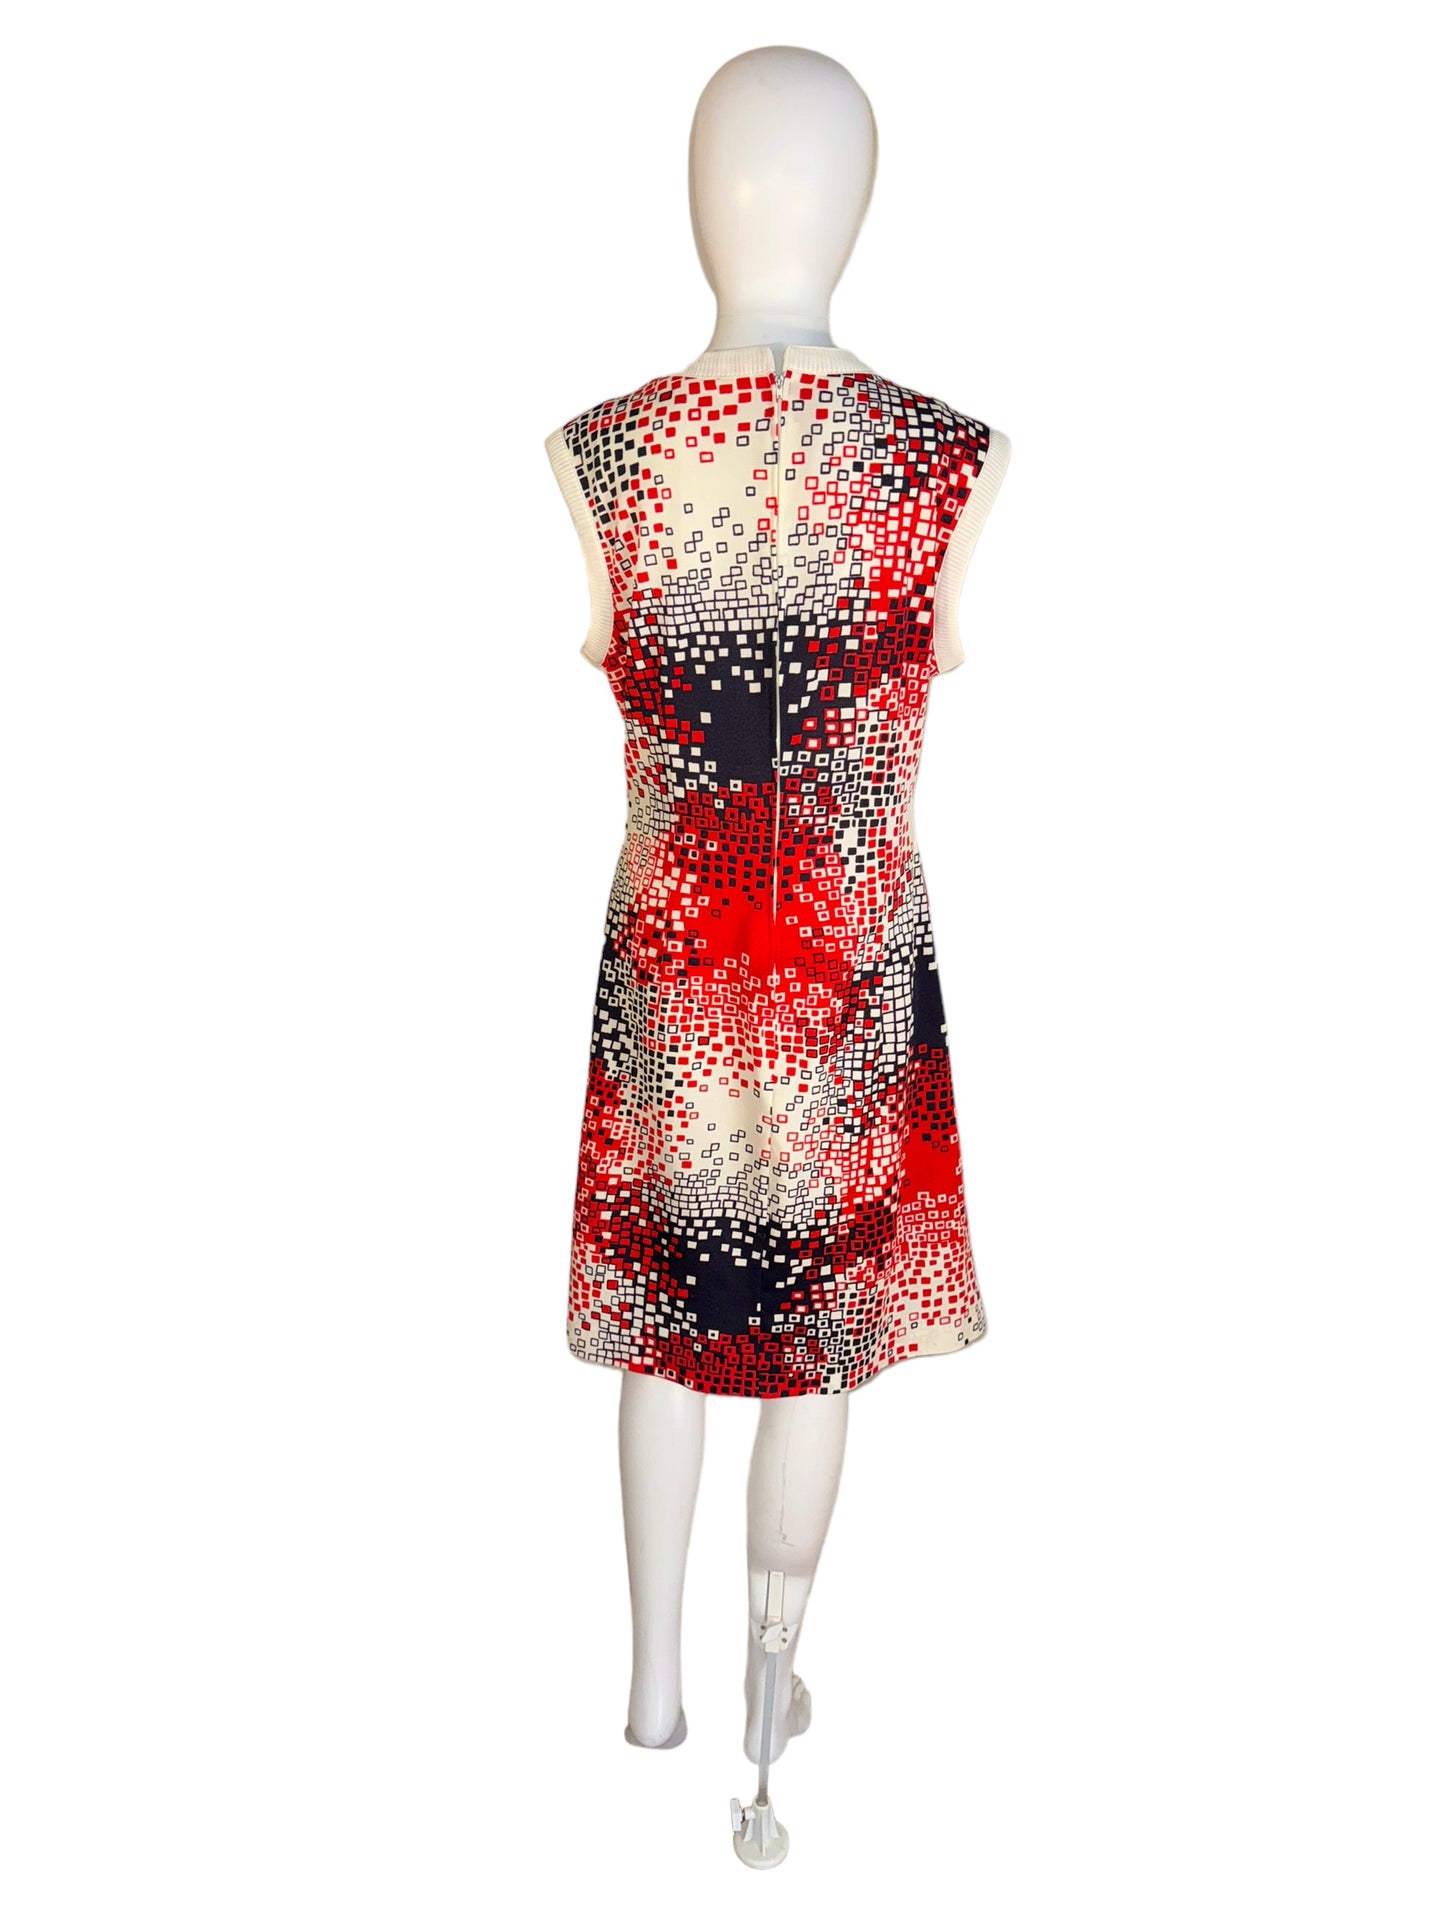 Vintage 1970s Color Block Dress Sleeveless Geometric Block